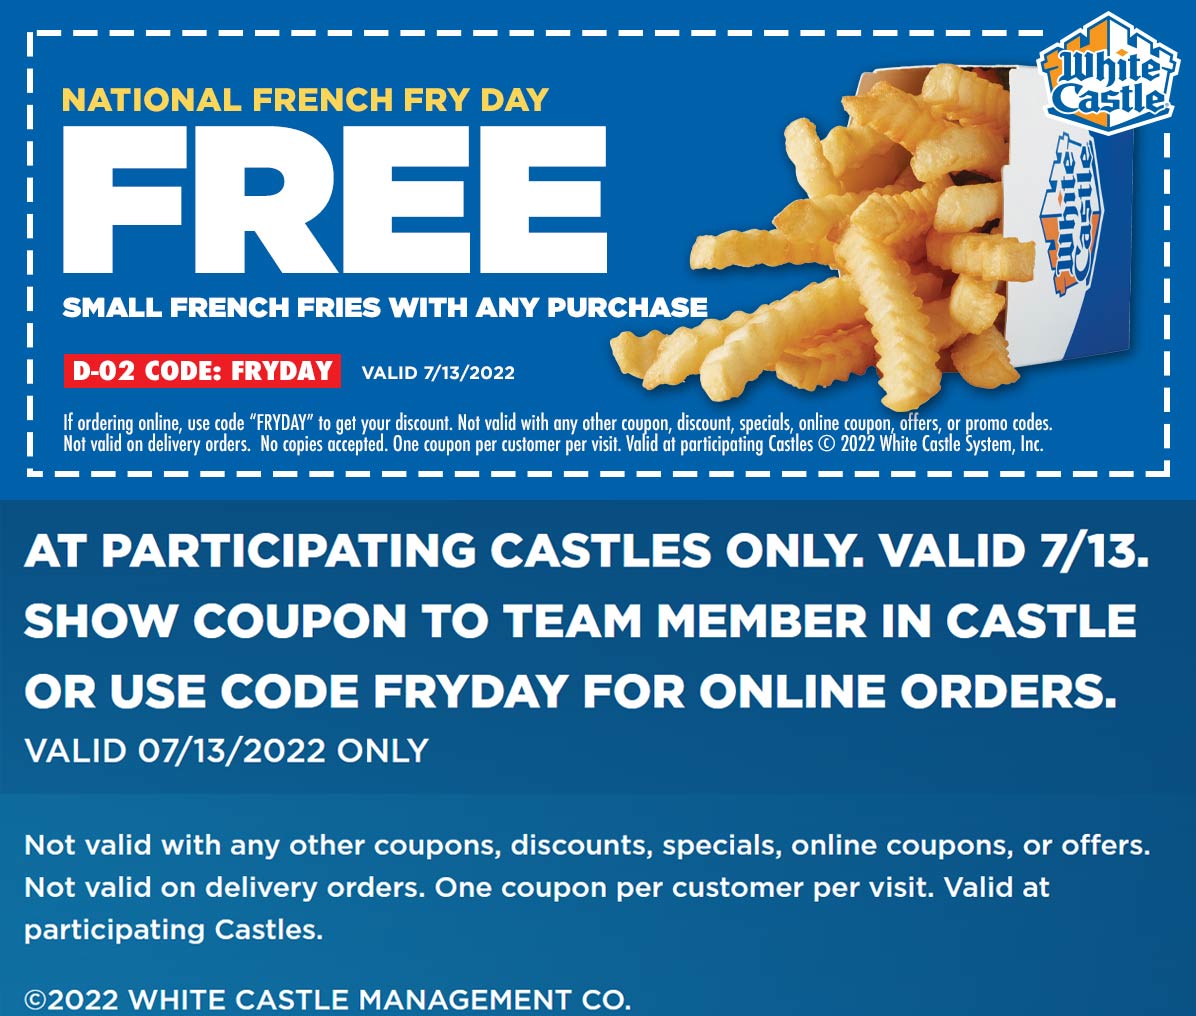 White Castle restaurants Coupon  Free fries with any order the 13th at White Castle restaurants #whitecastle 